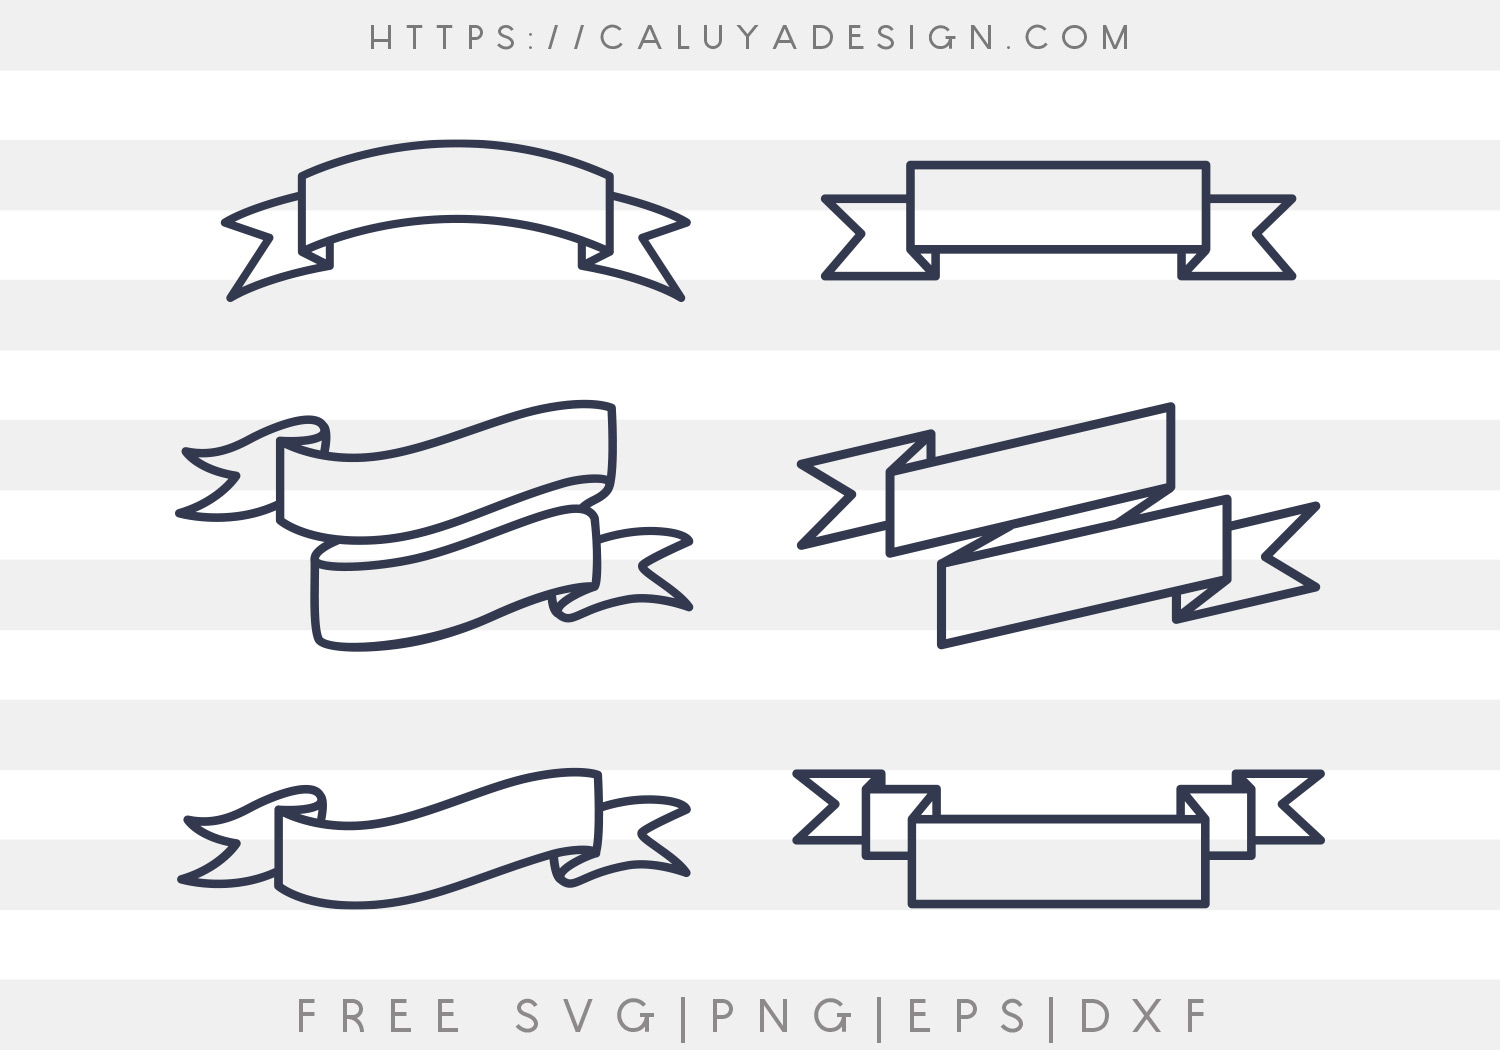 Ribbon Banner SVG, PNG, EPS & DXF